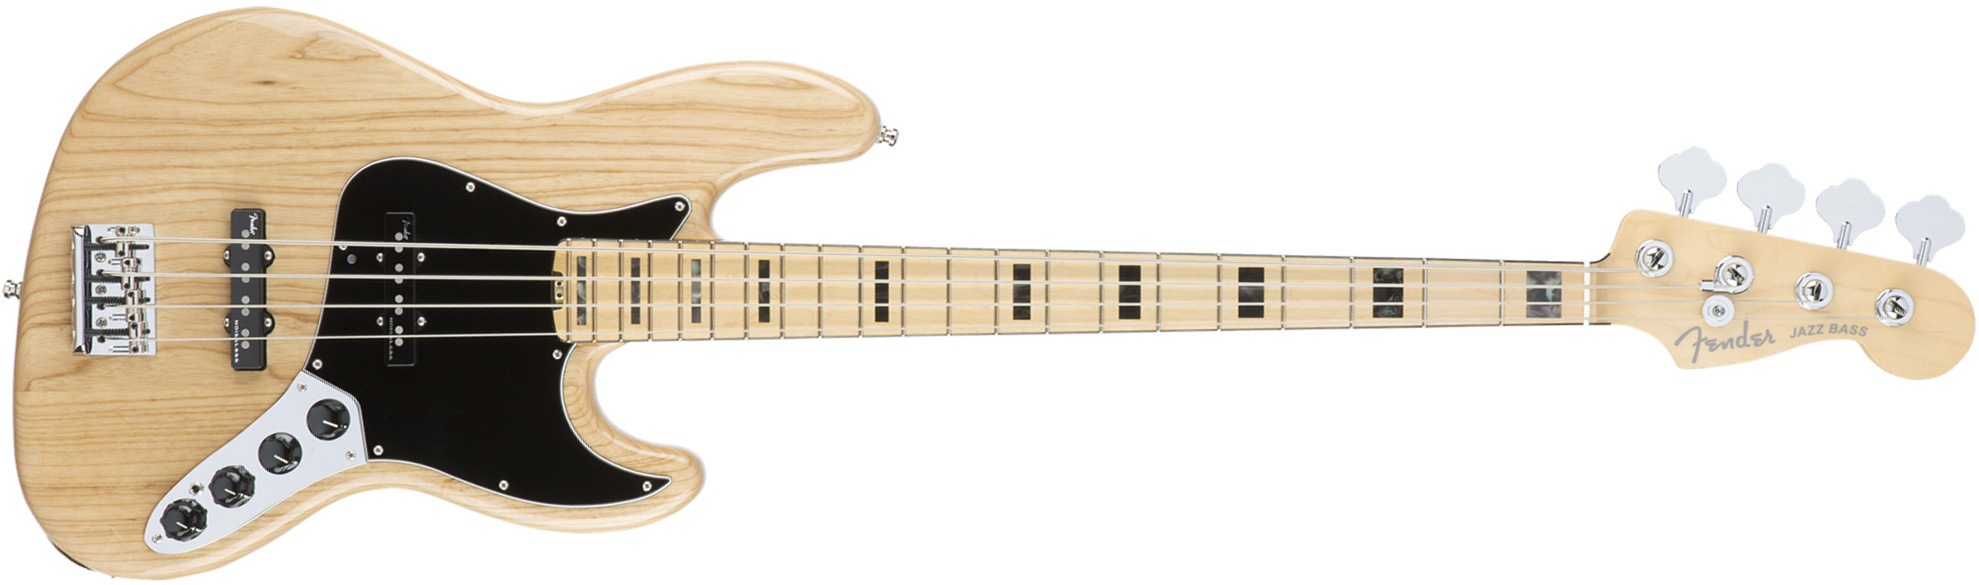 Fender Jazz Bass American Elite Ash 2016 (usa, Mn) - Natural - Basse Électrique Solid Body - Main picture